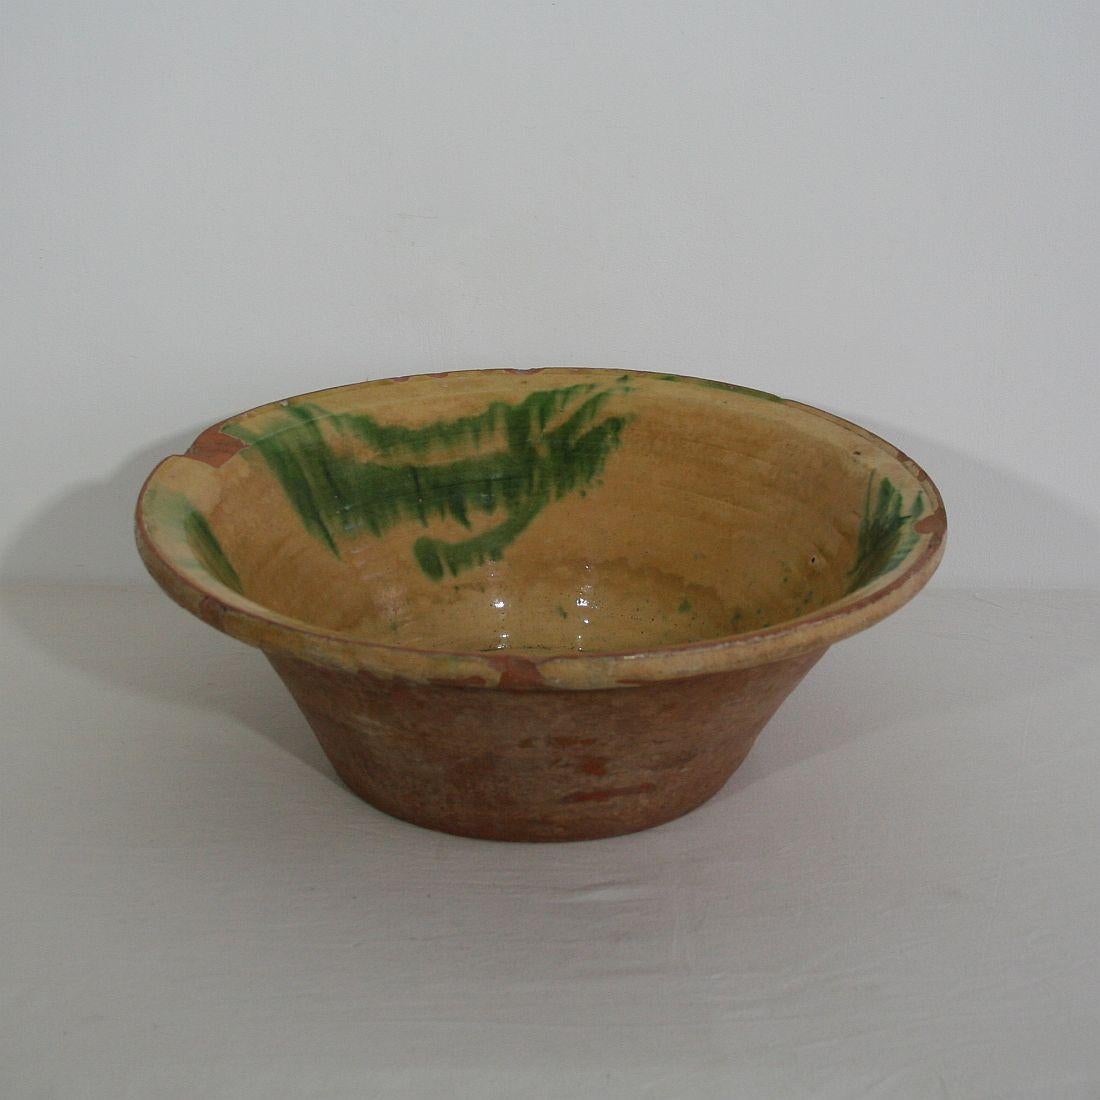 19th Century Spanish Glazed Terracotta Bowl (Land)